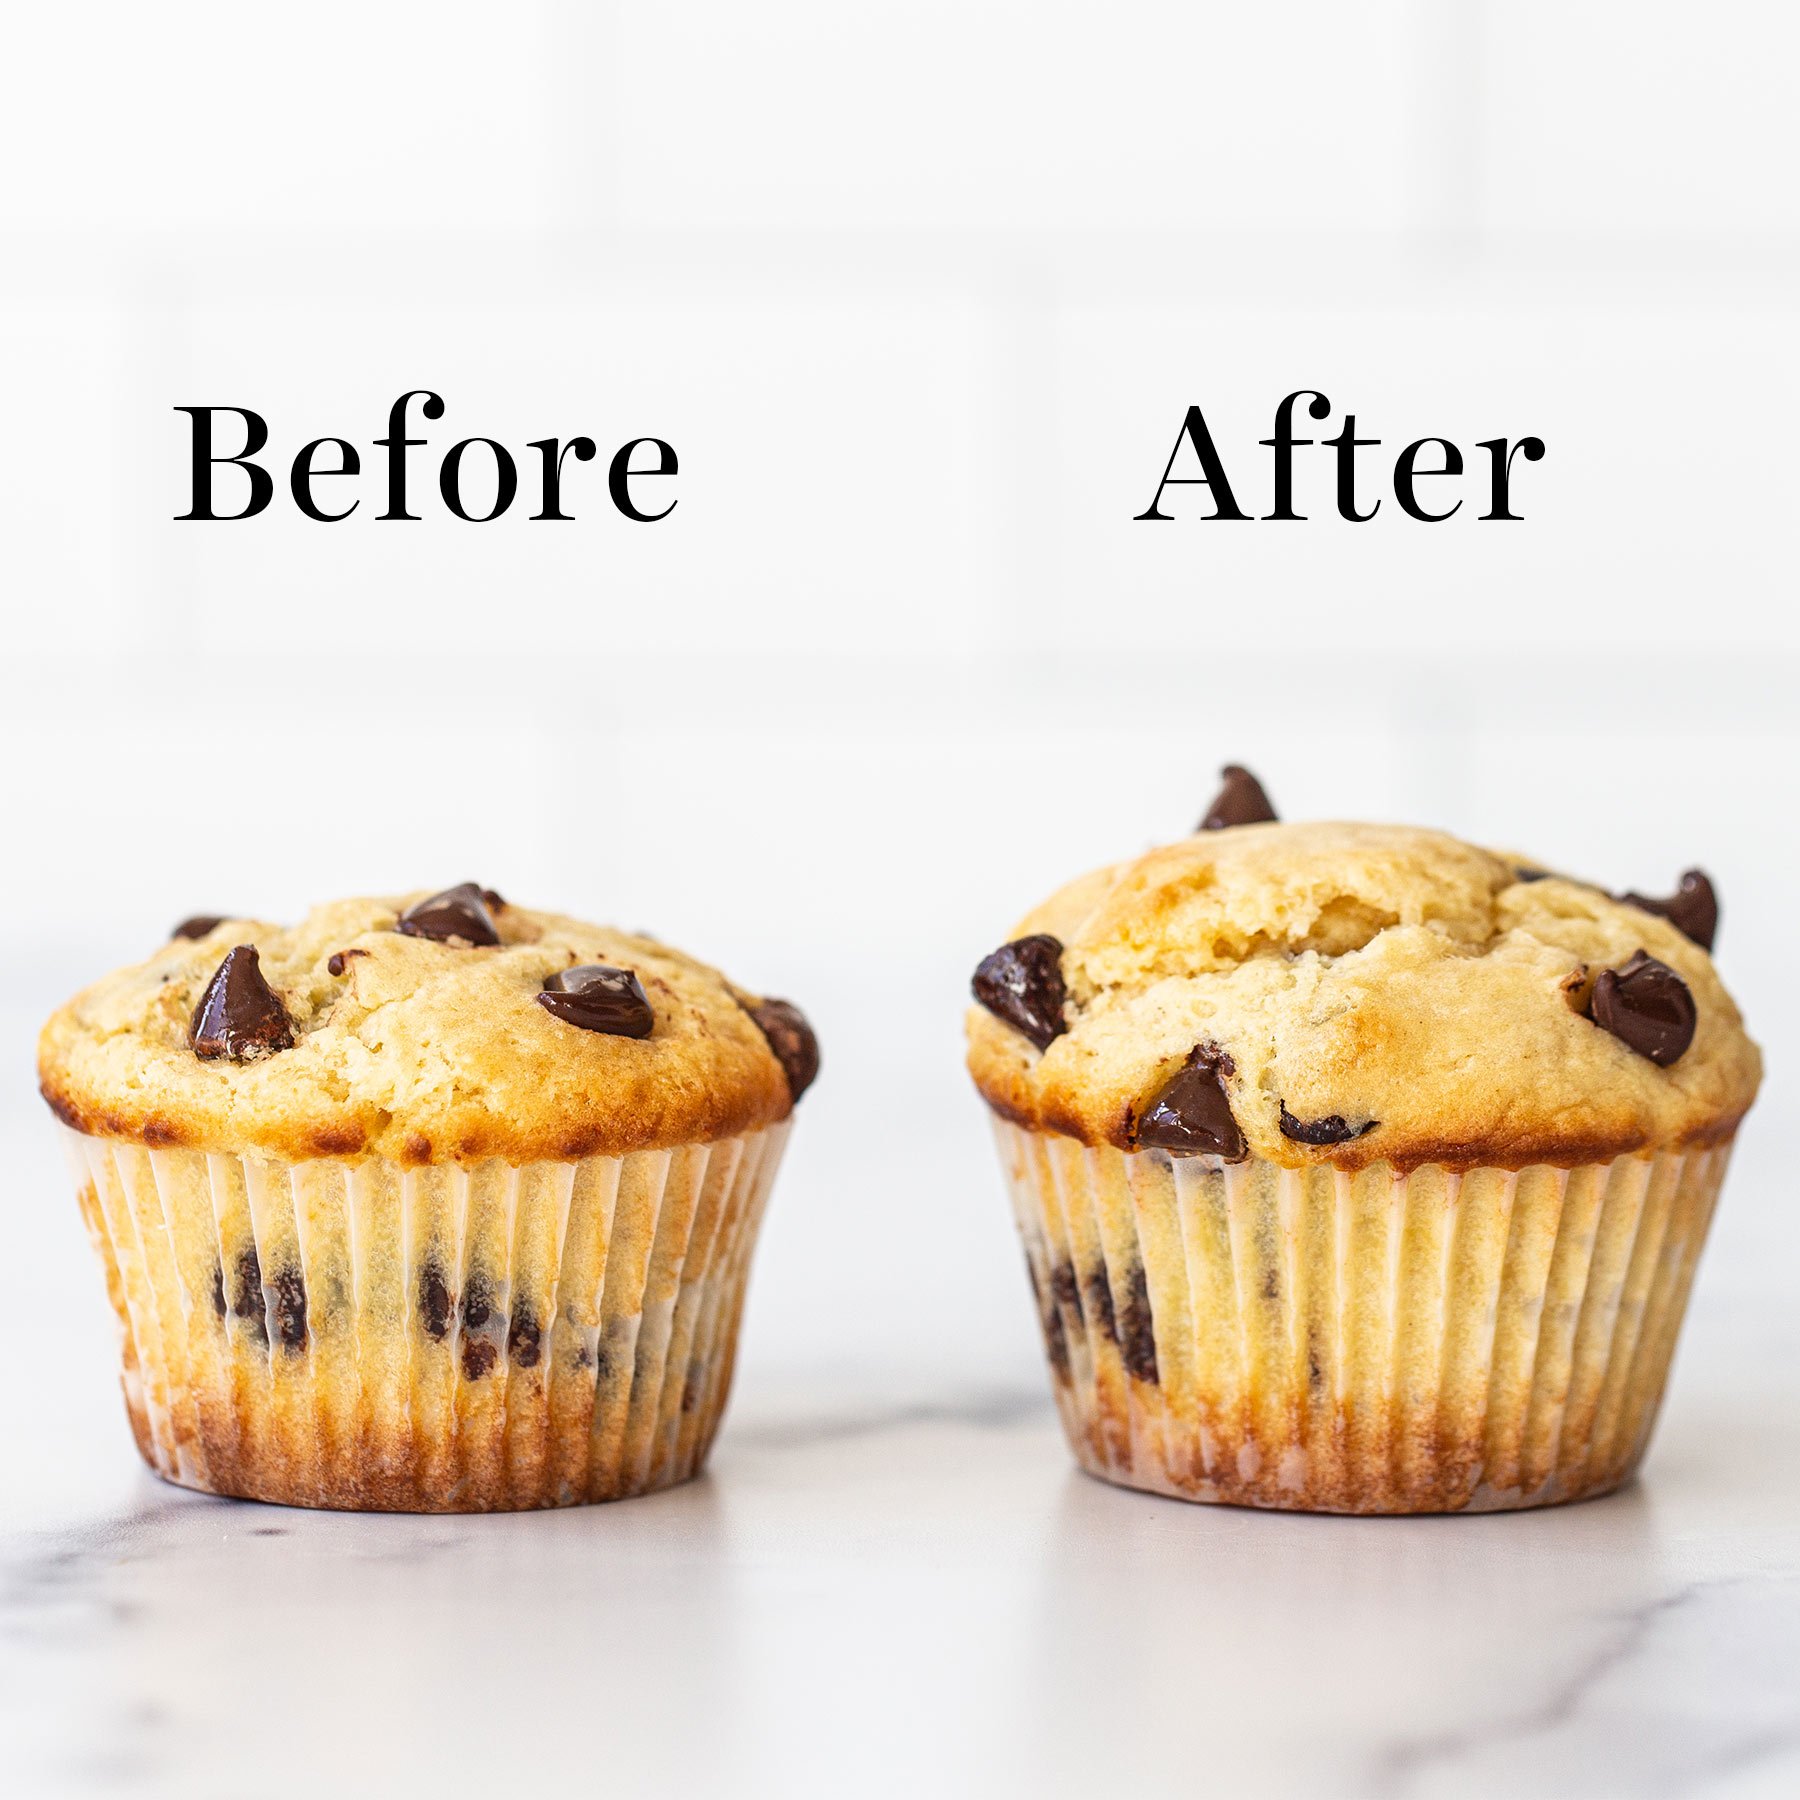 comparison of muffin batter rested vs baked immediately